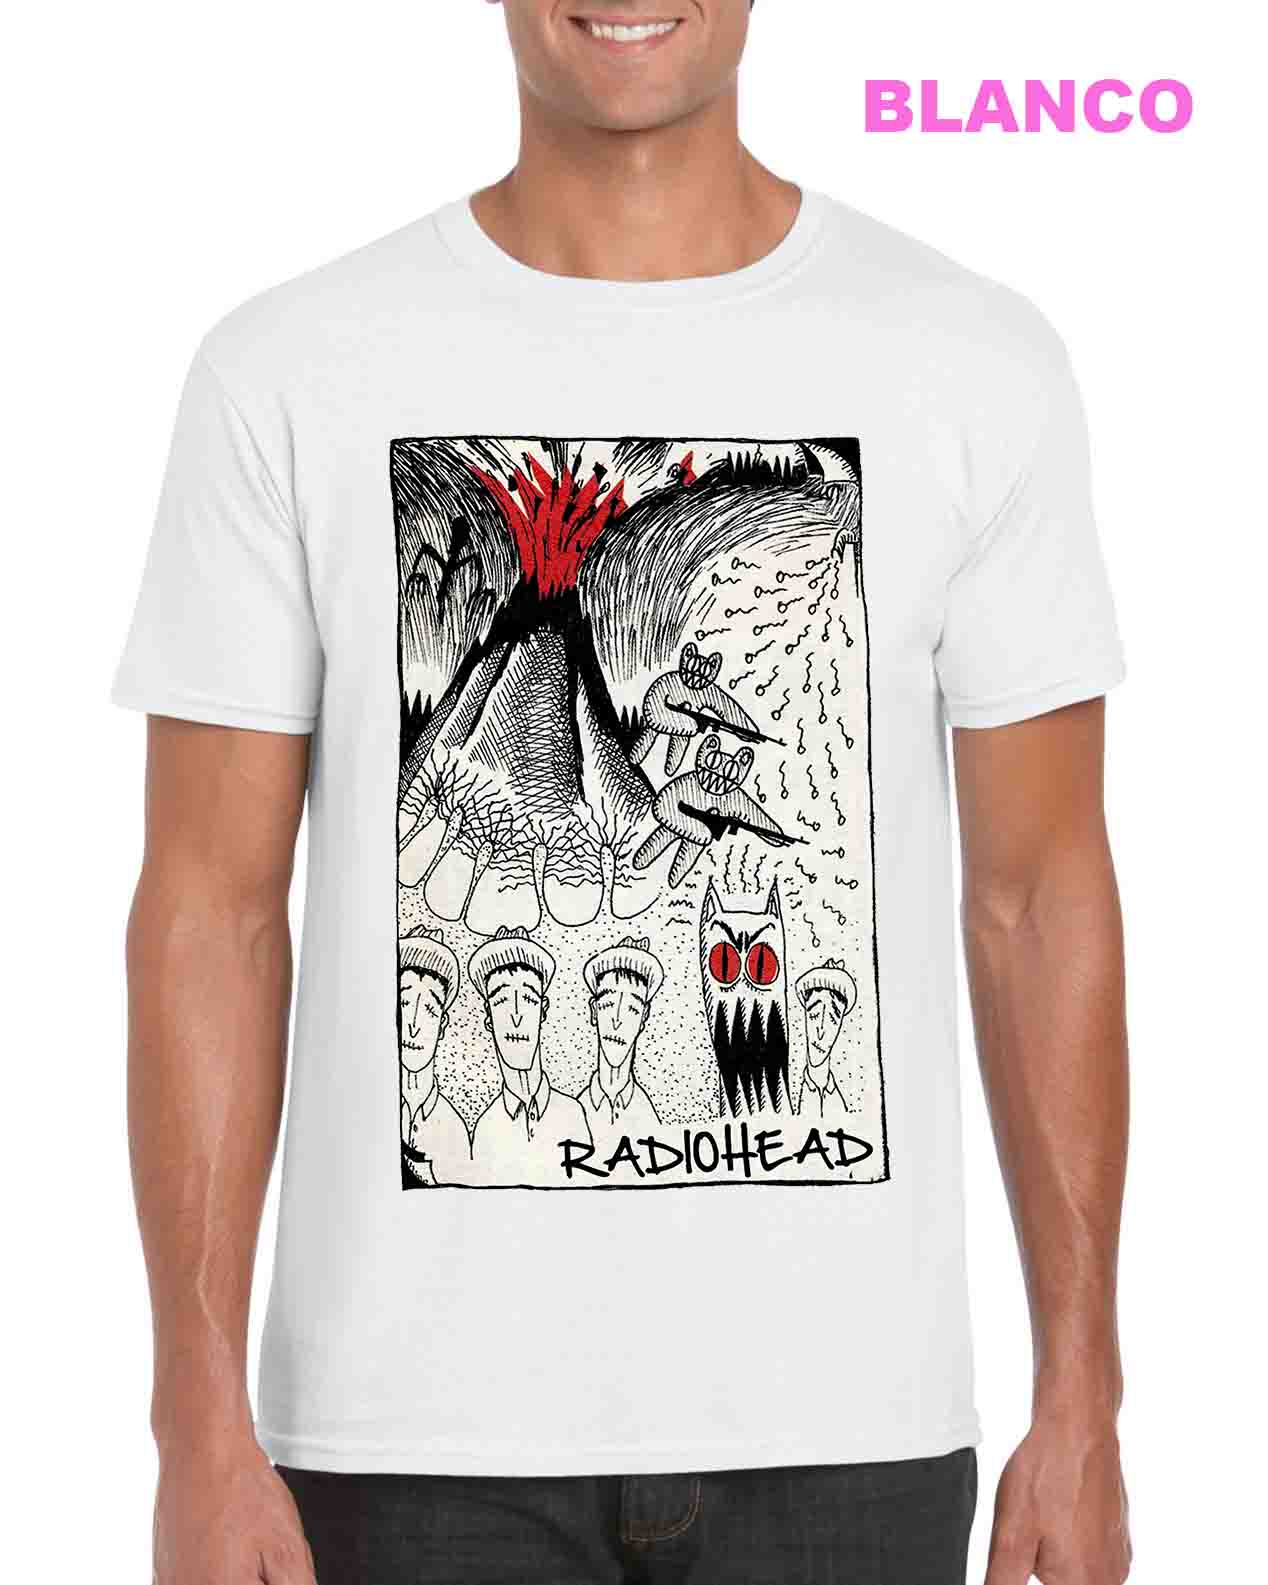 Radiohead - The End